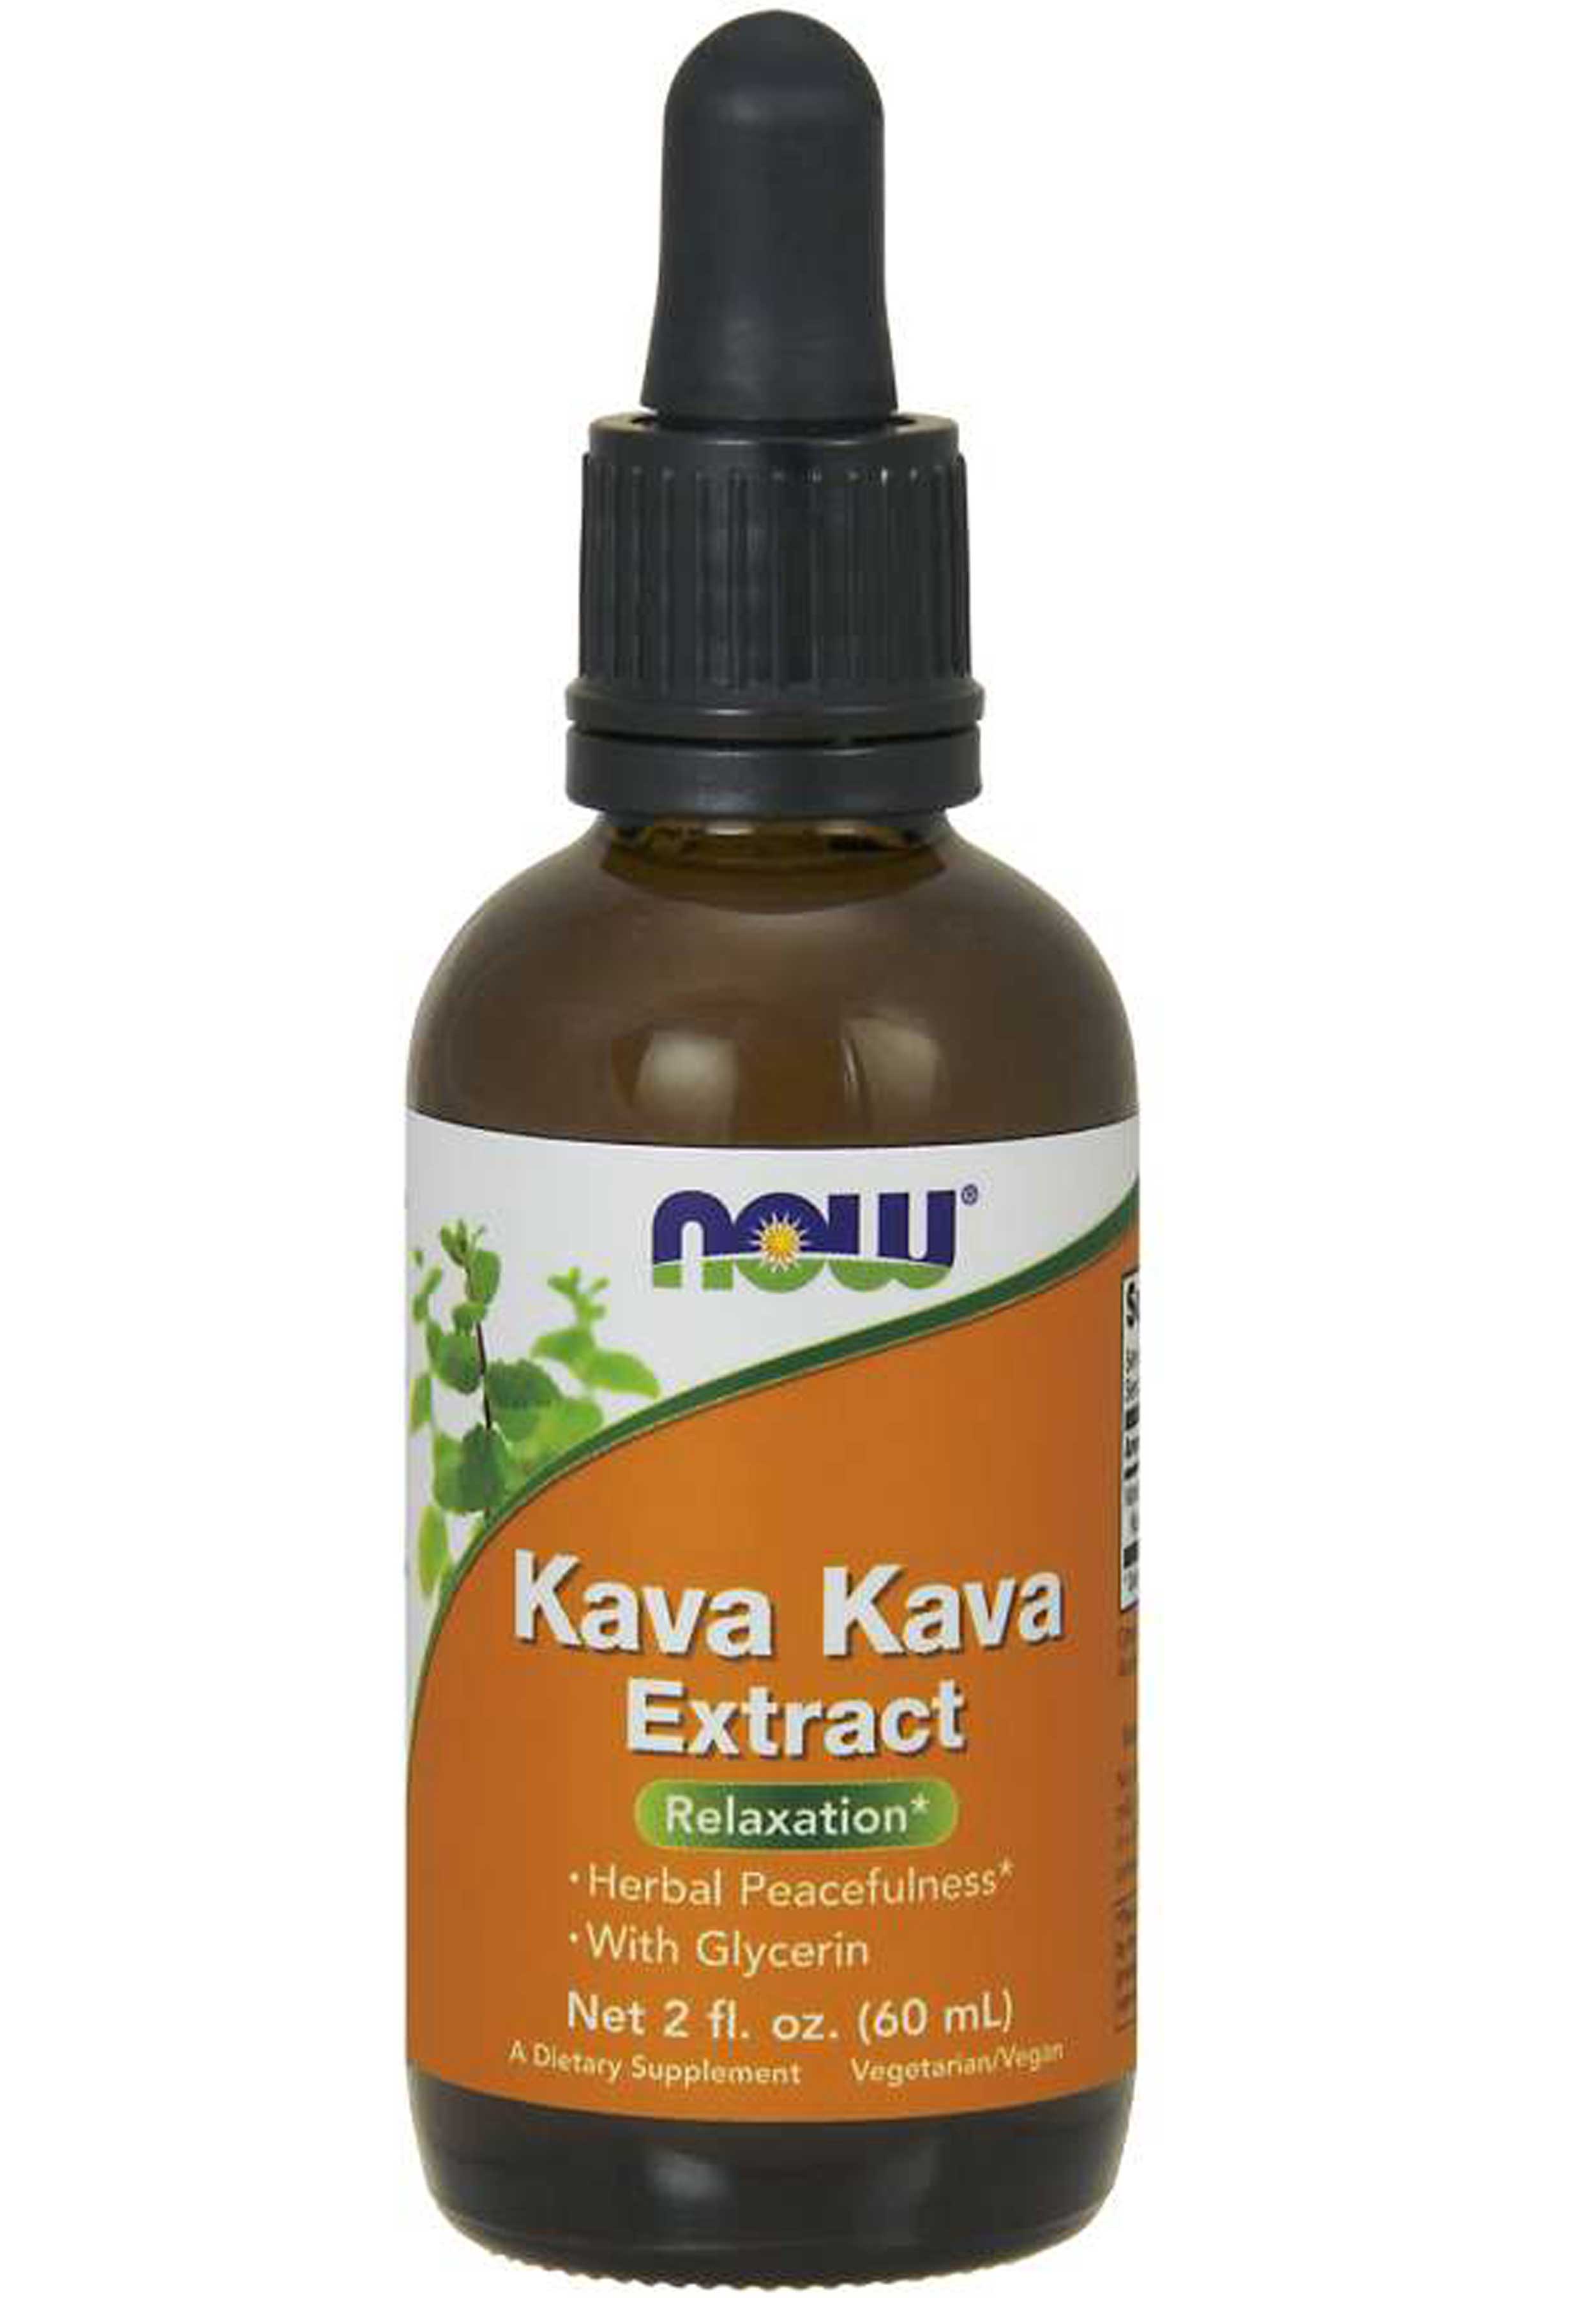 NOW Kava Kava Extract, Liquid